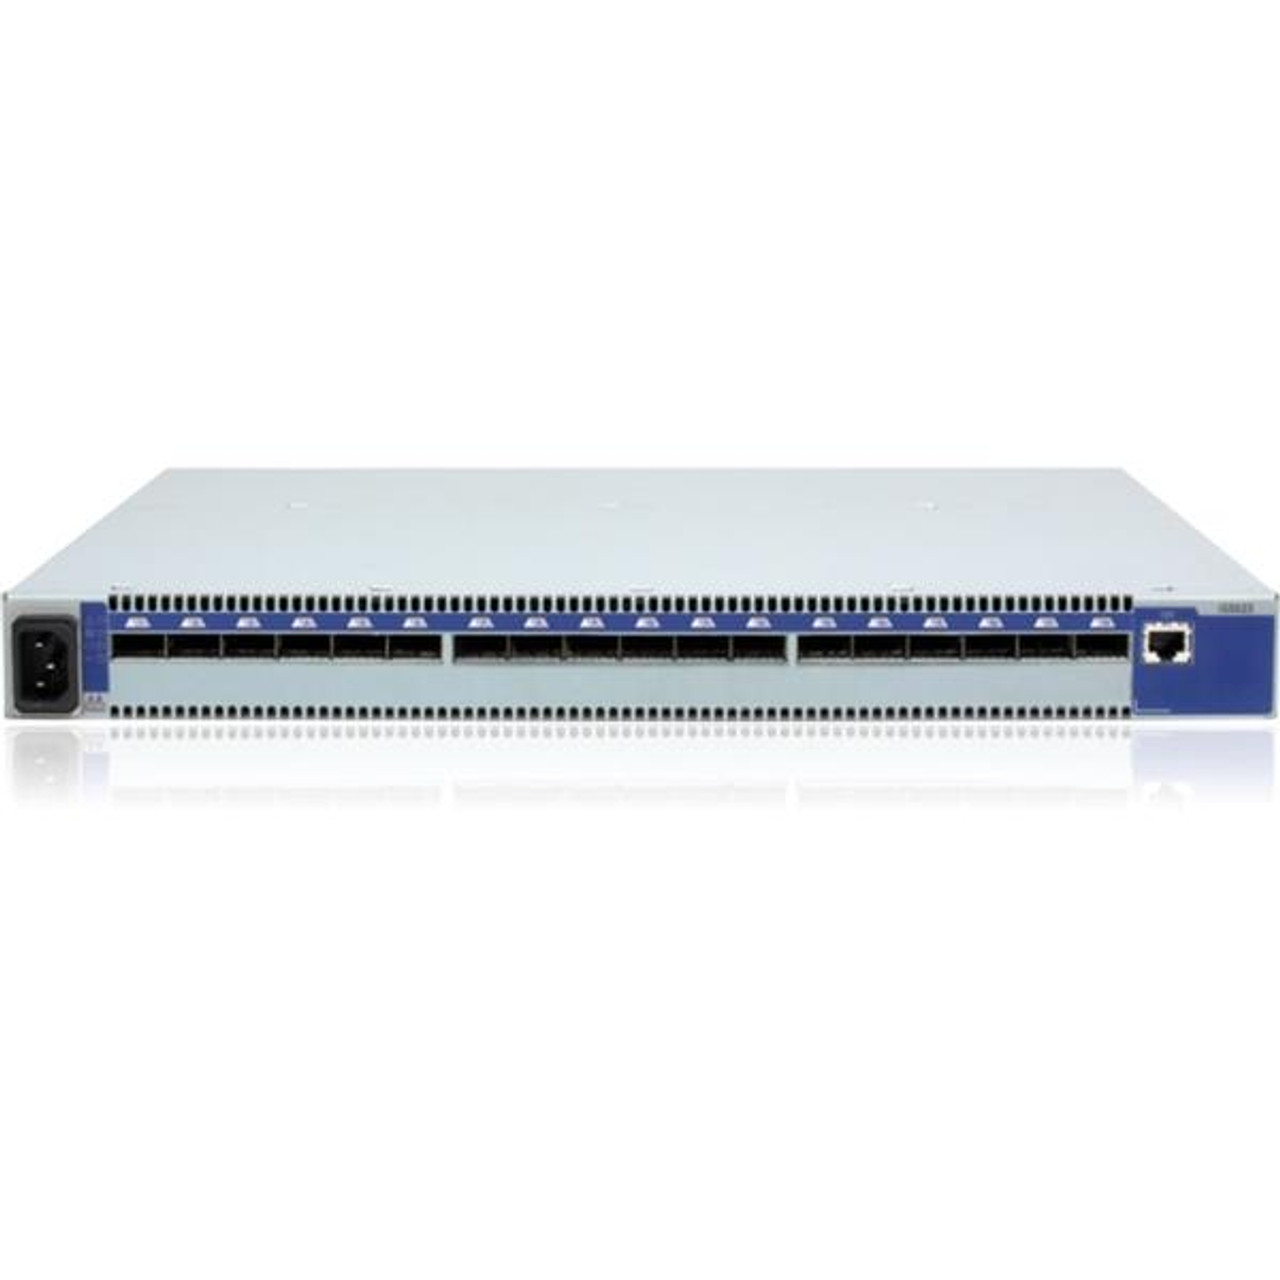 MIS5023Q-1BFR Mellanox Infiniscale IV QDR Infiniband Ethernet Switch 18 QSFP Ports 1U Rack Mountable (Refurbished)